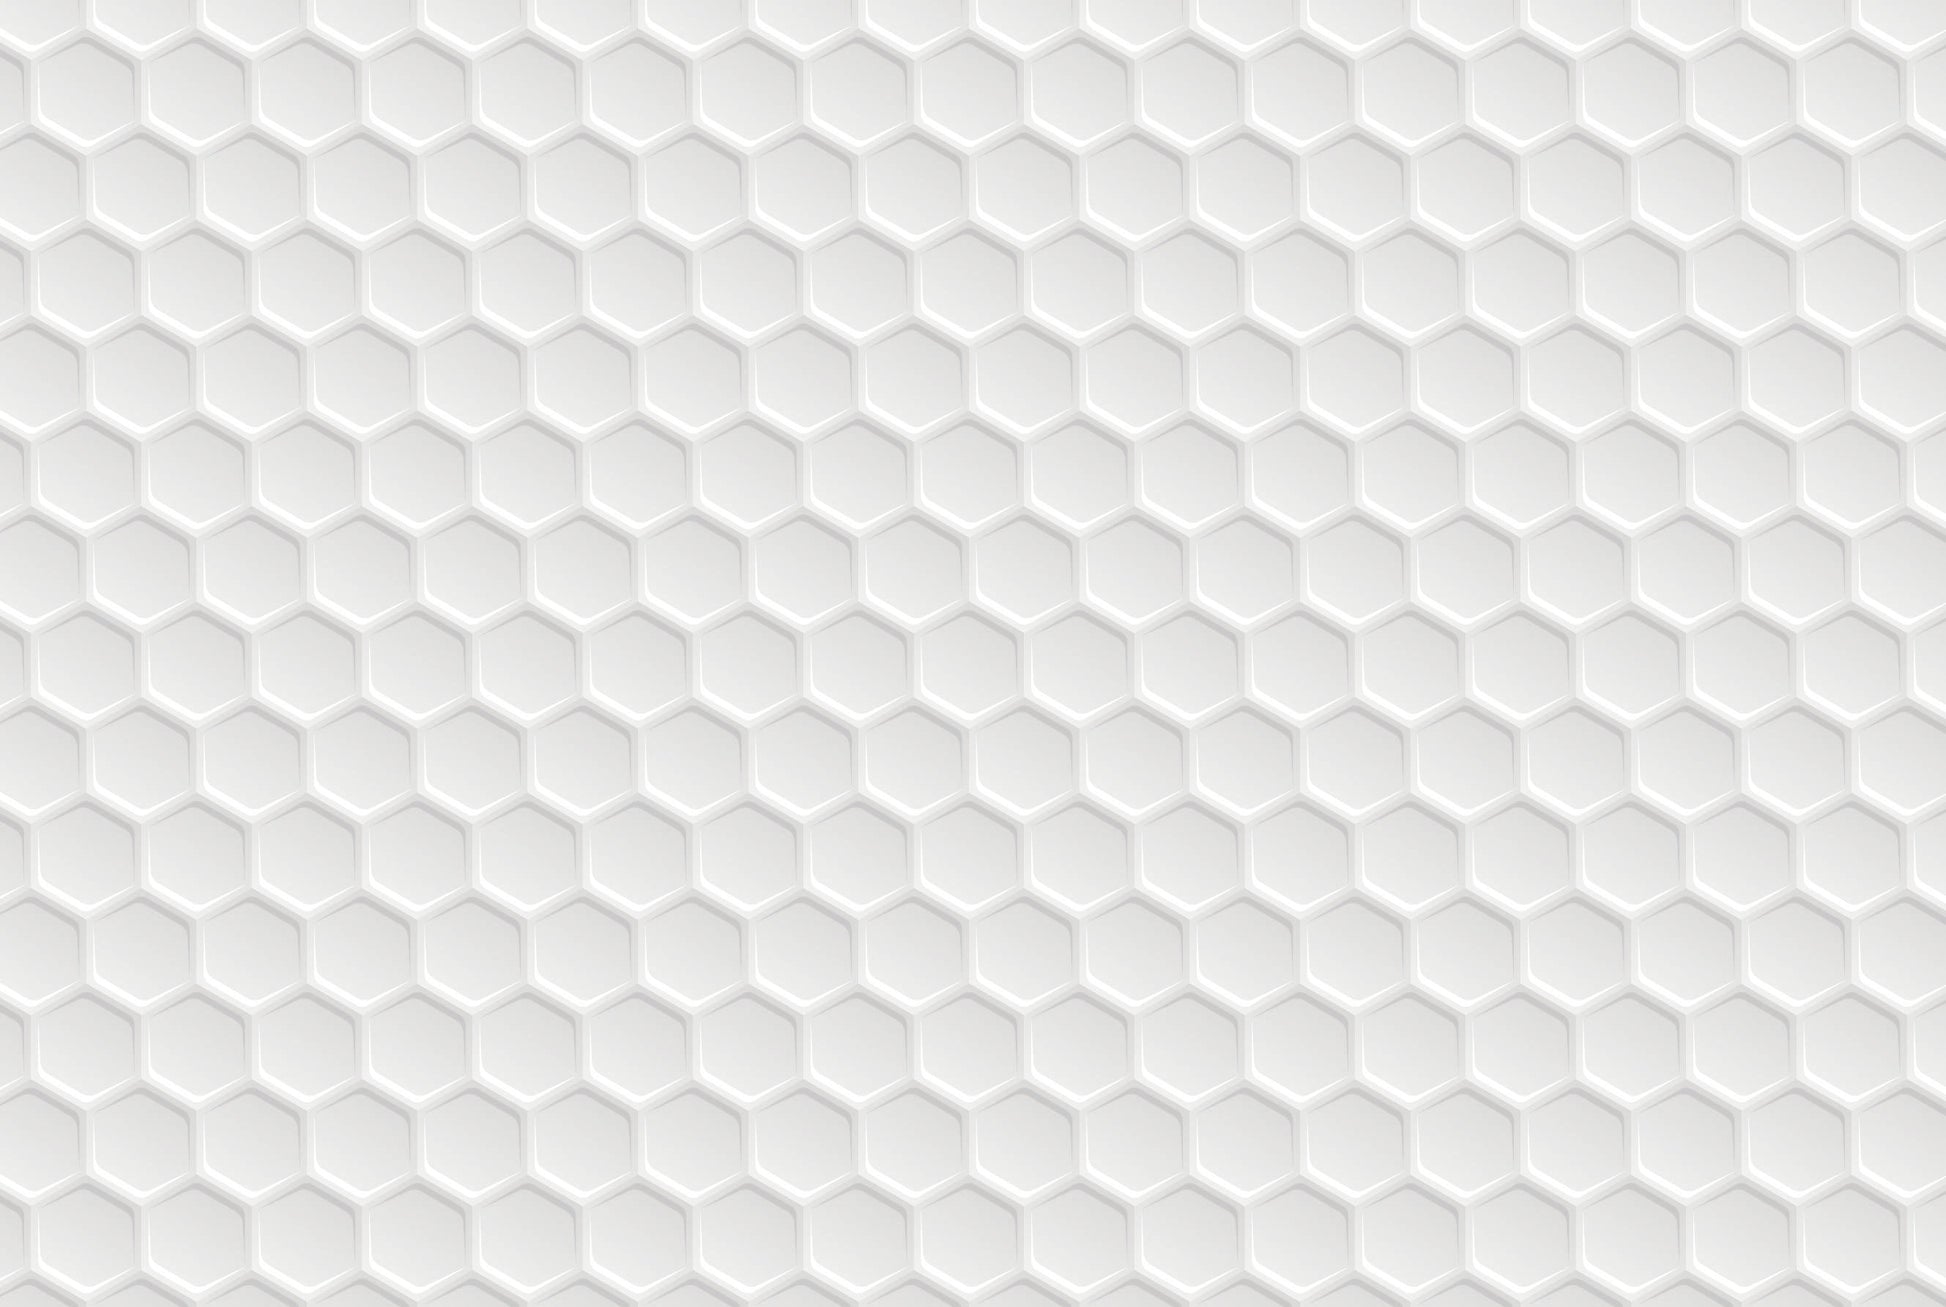 White Hexagon Tile Photography Backdrop freeshipping - Bubb Market